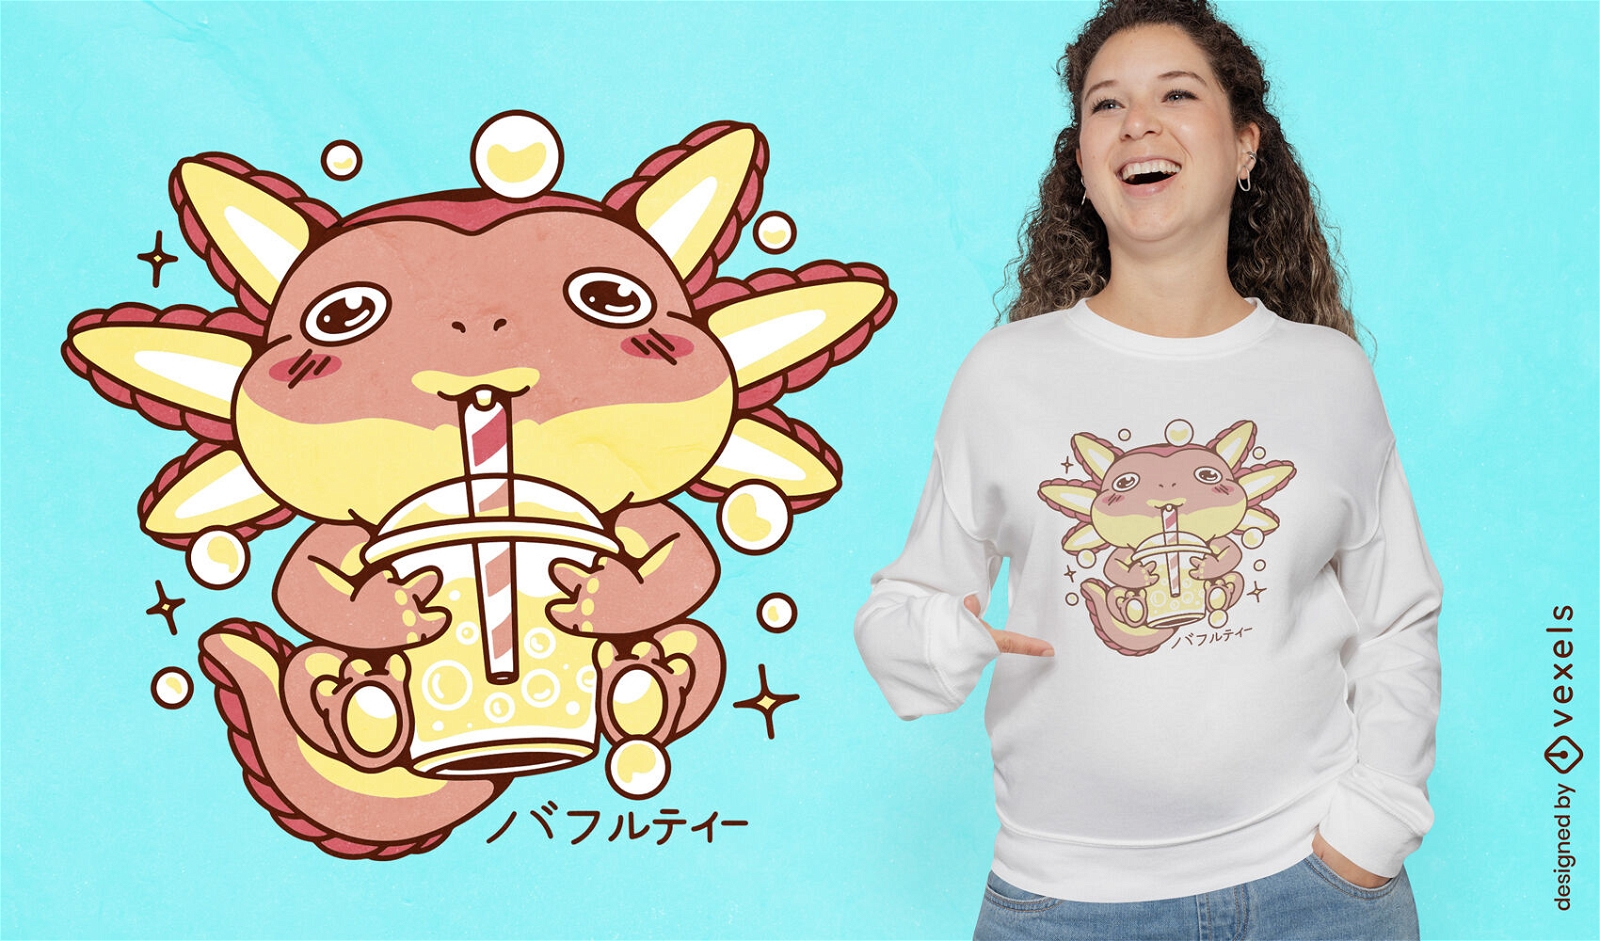 Axolotl bubble tea drink t-shirt design